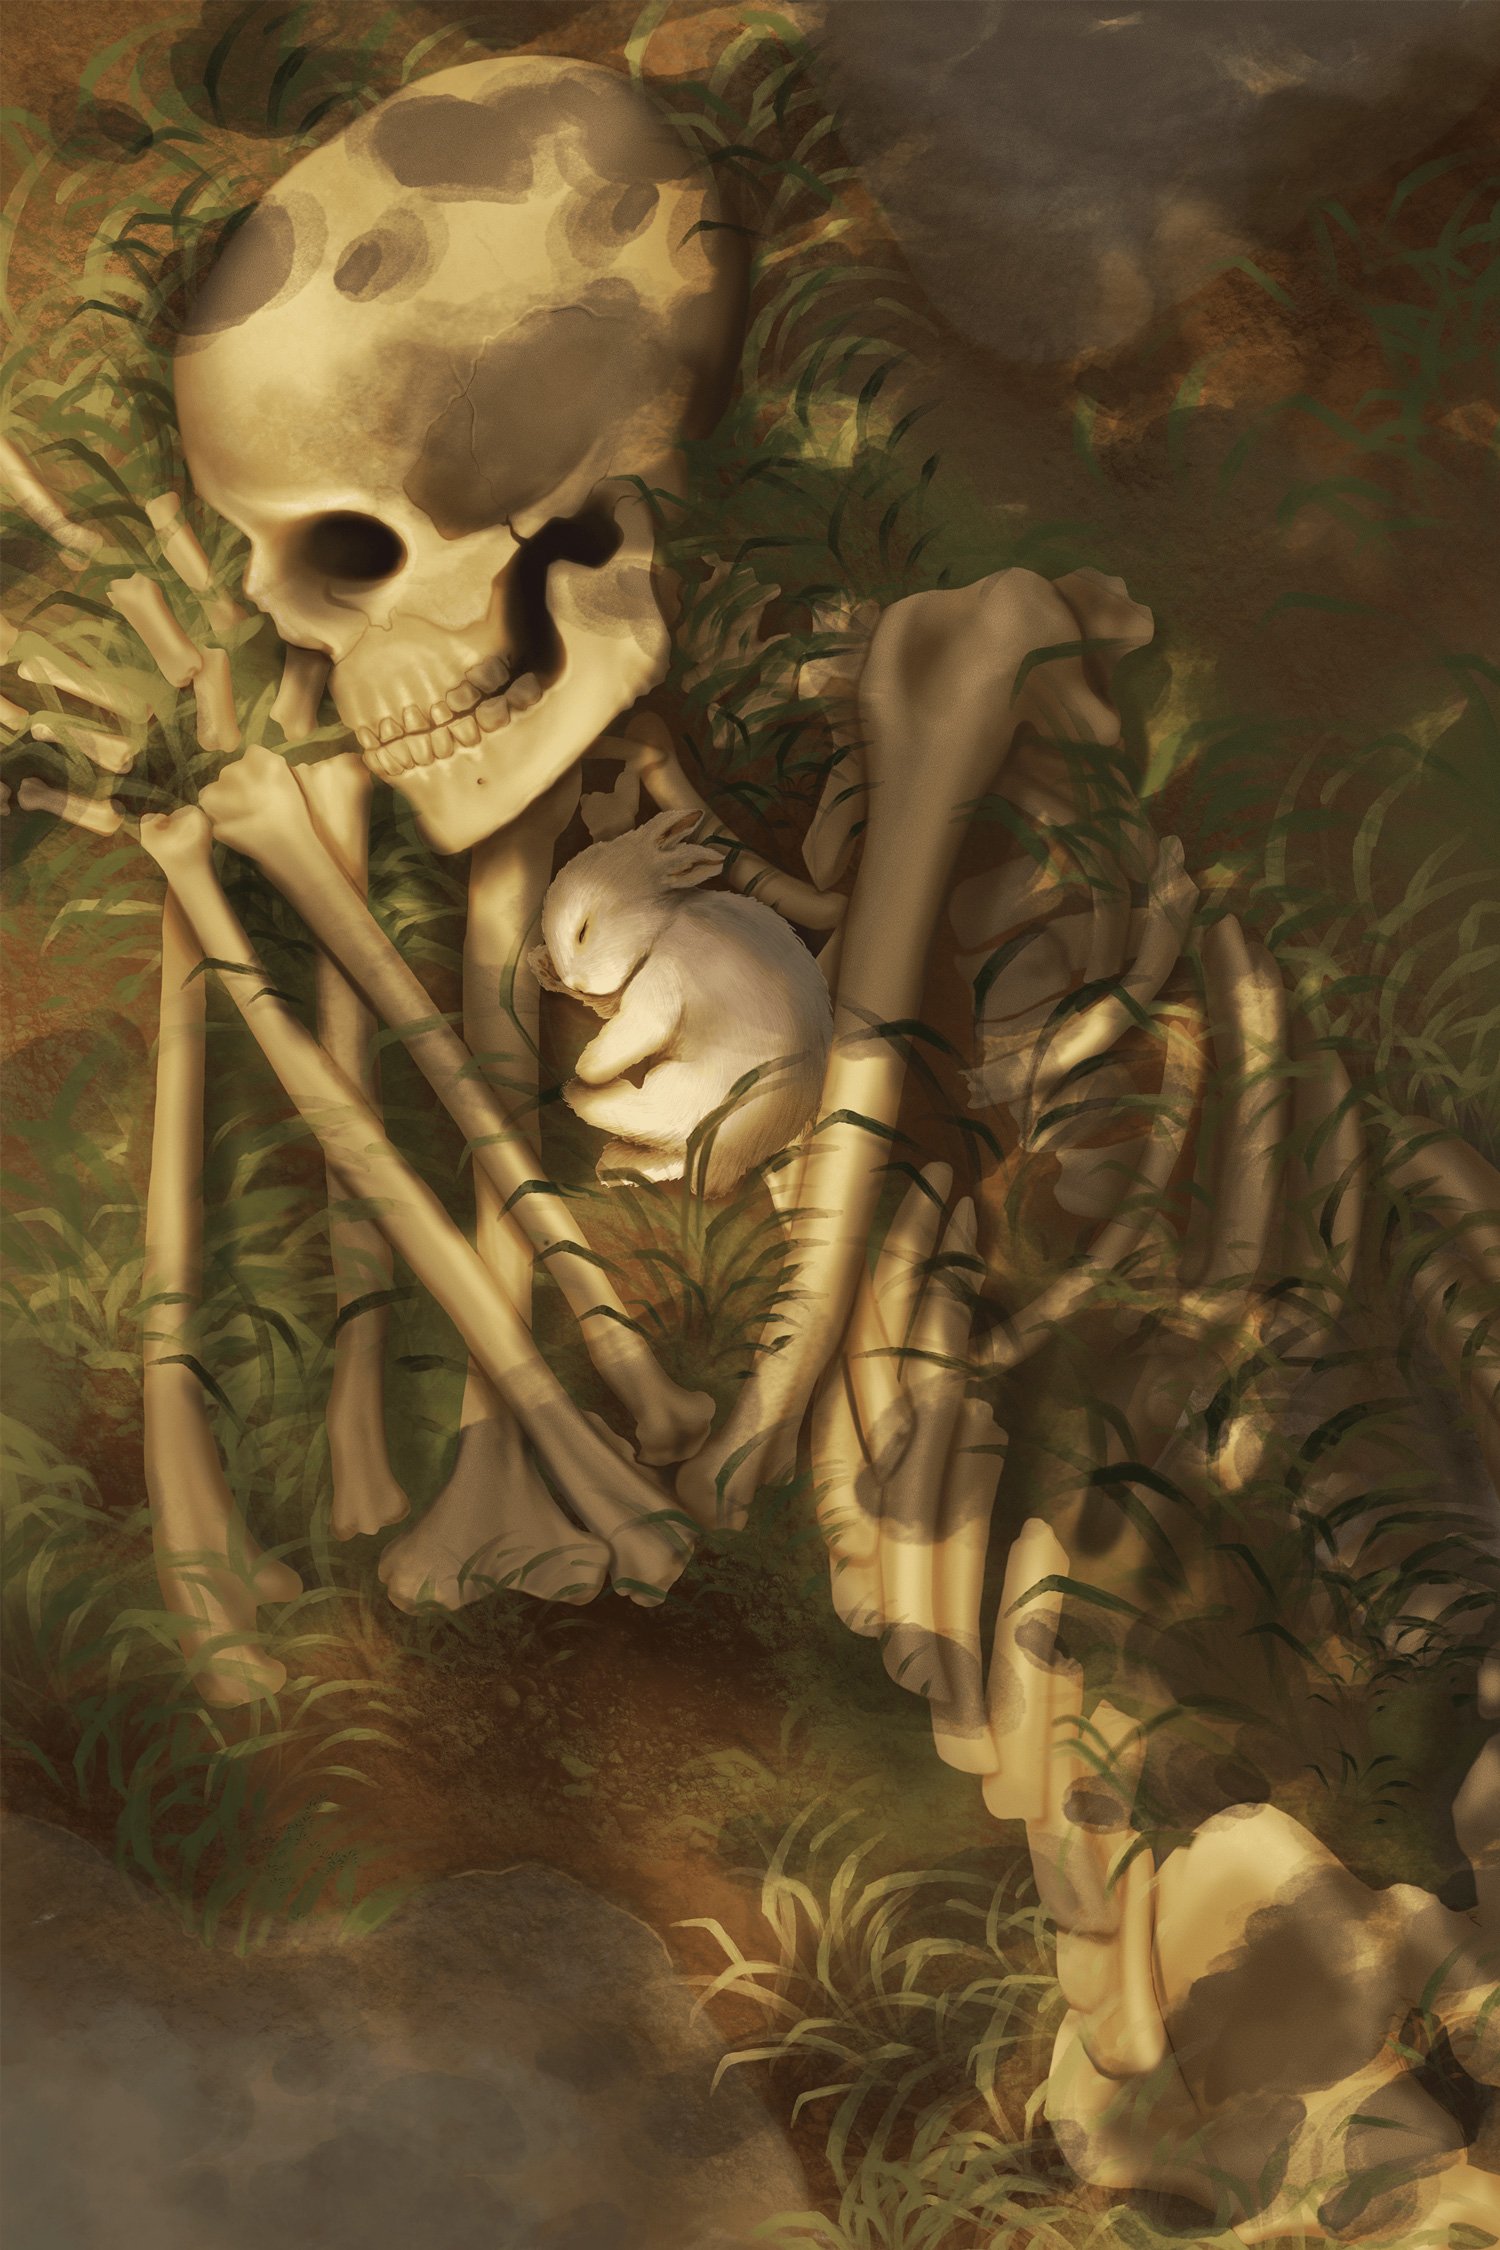 SOLACE--skeleton--bunny--rabbit--death--peaceful--dappled-light--bones--nature.jpg